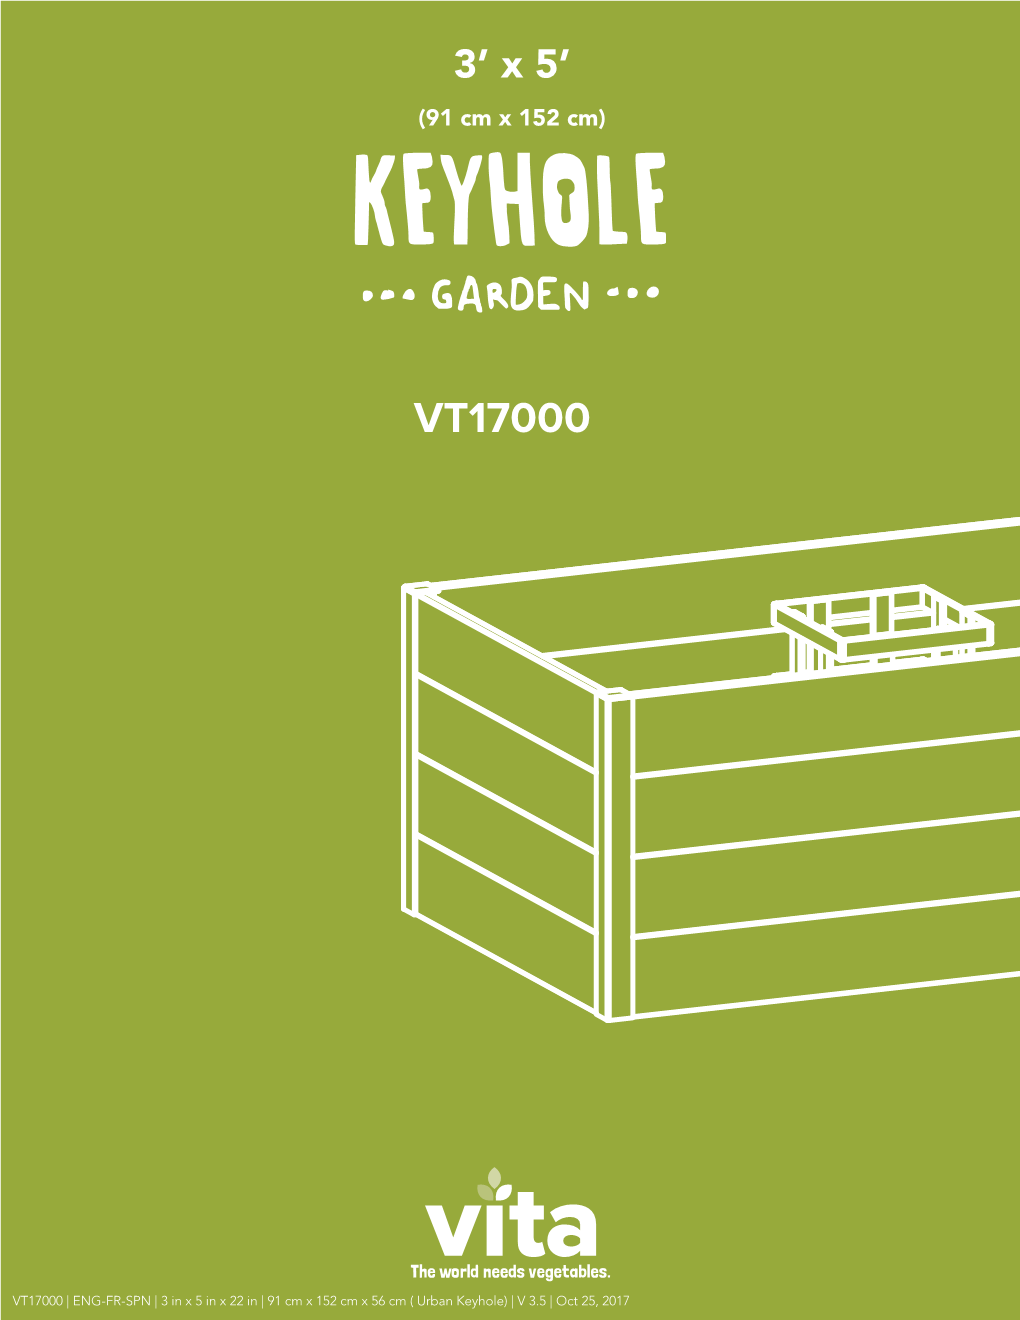 VT17102 3X5 Keyhole Garden Bed-Instruction V2.0 REV090517